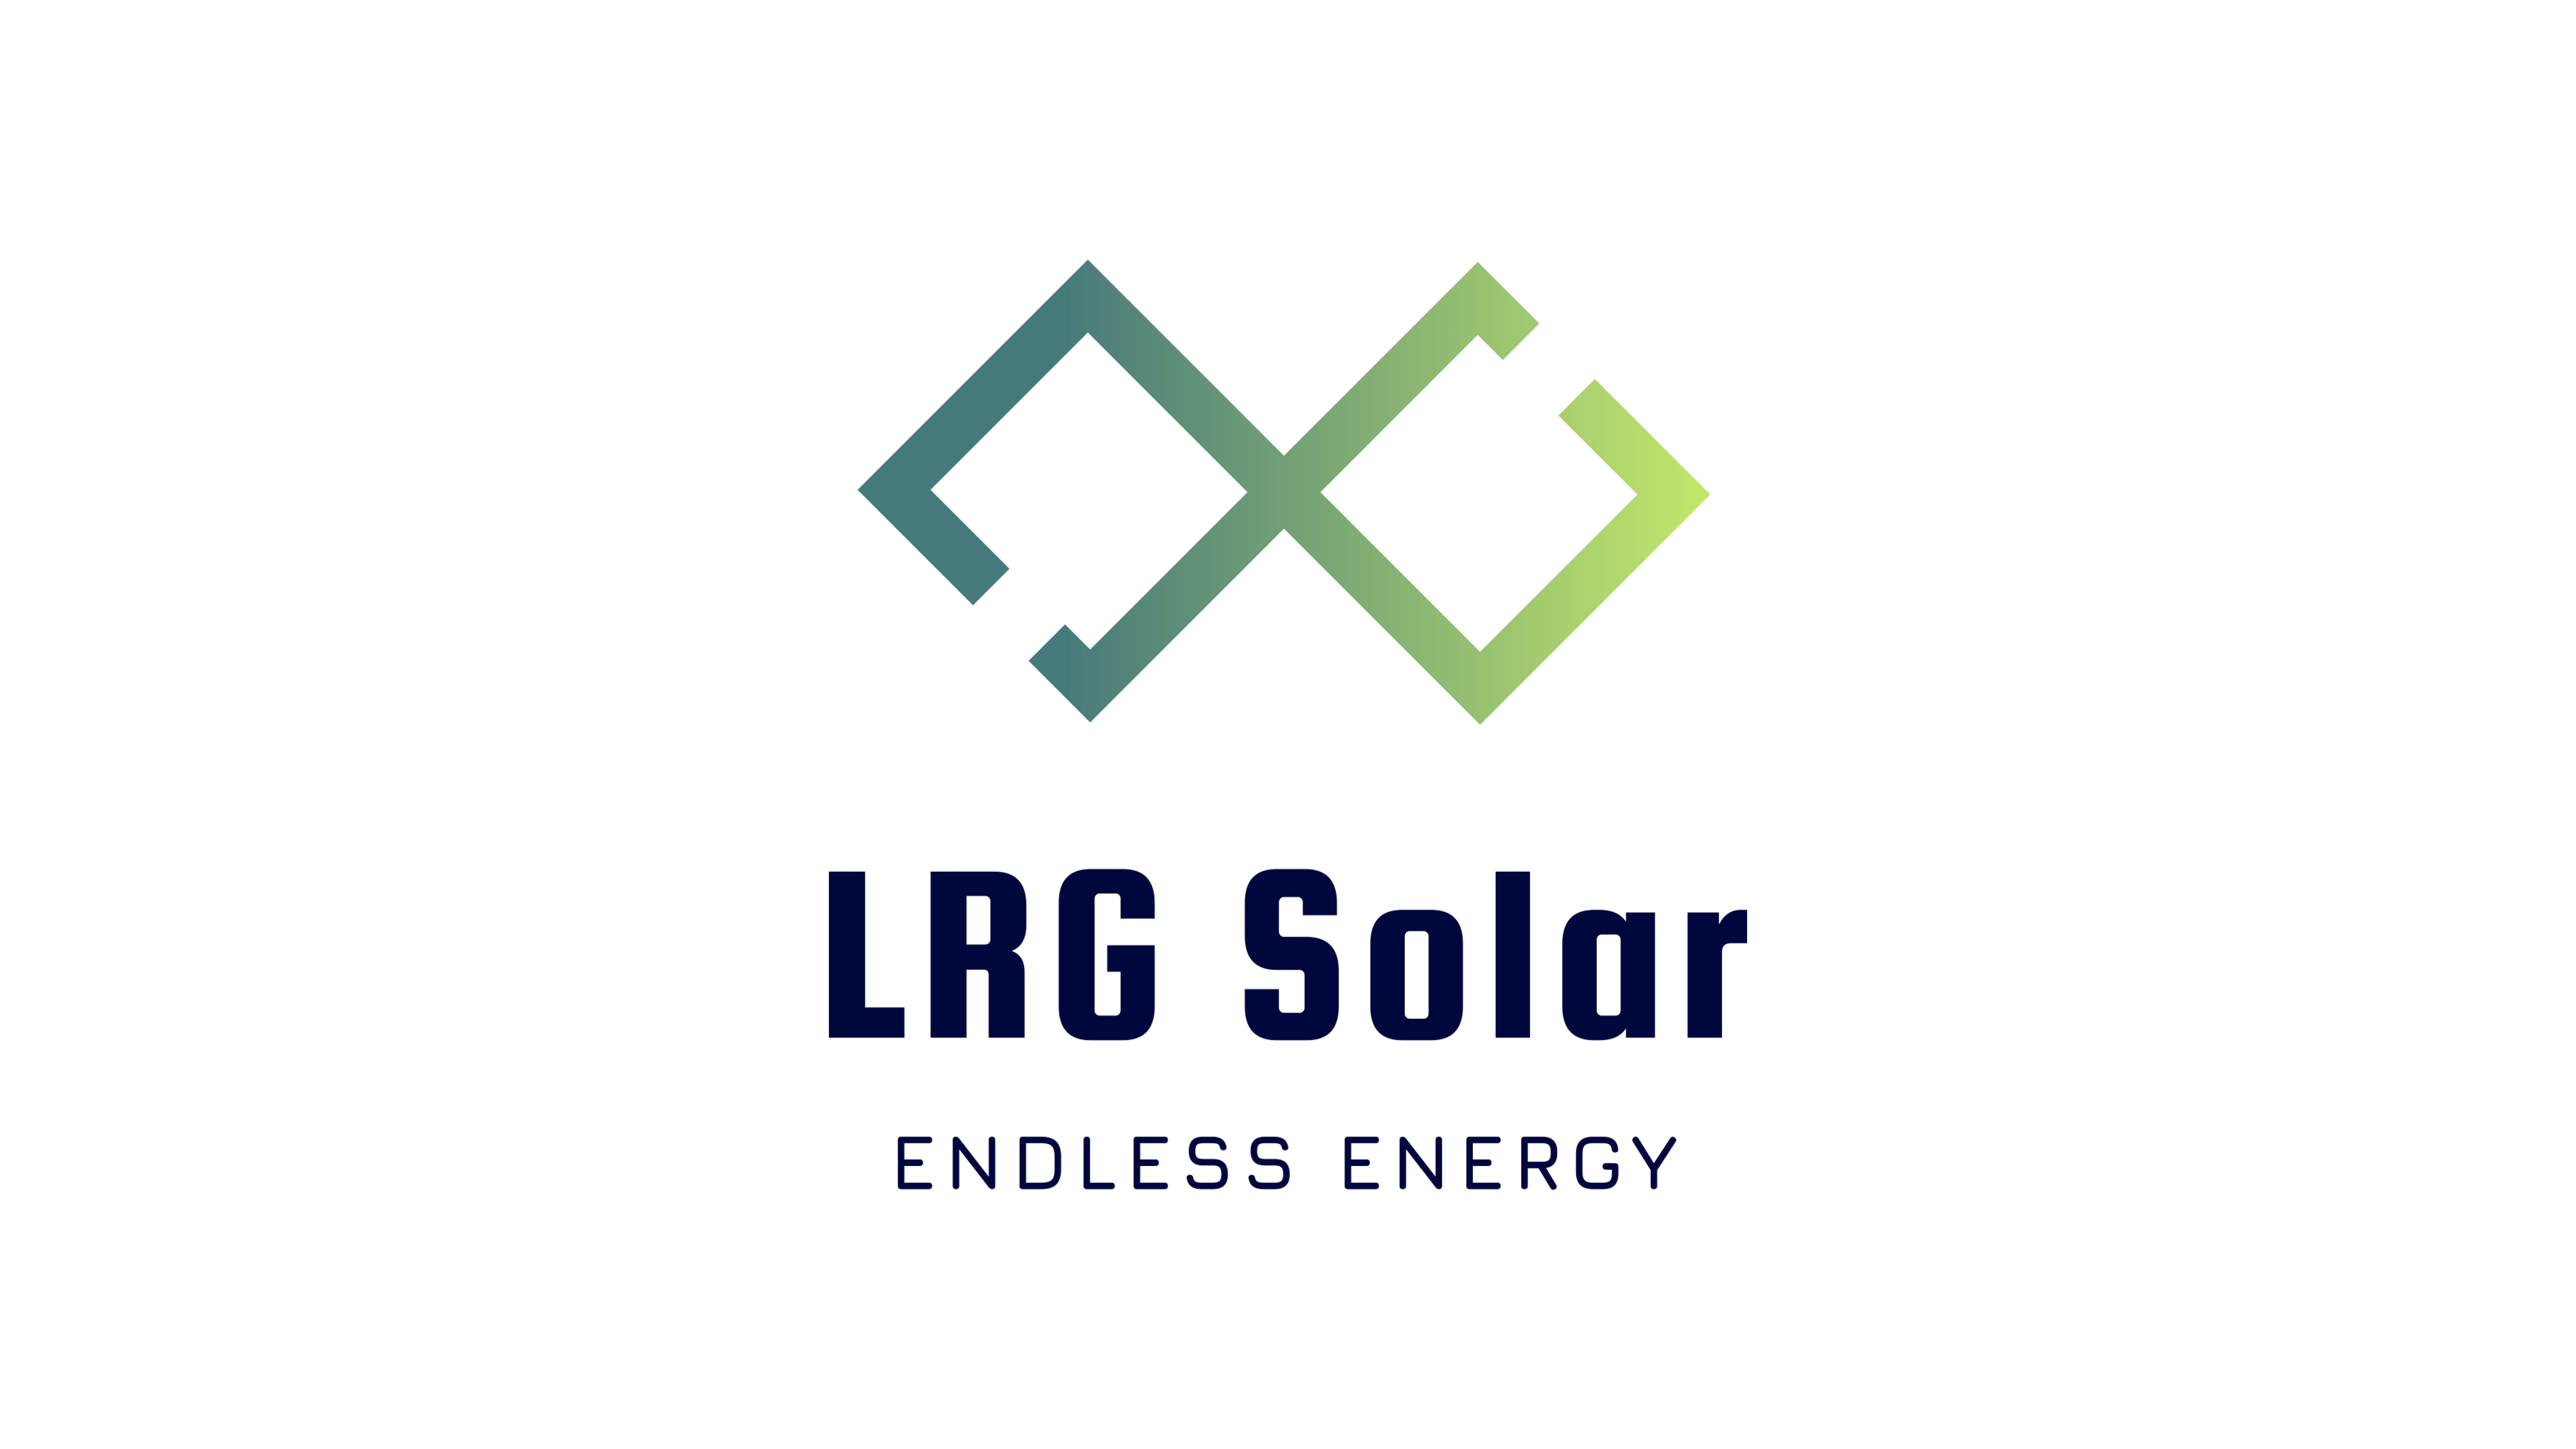 LRG Solar Supplies